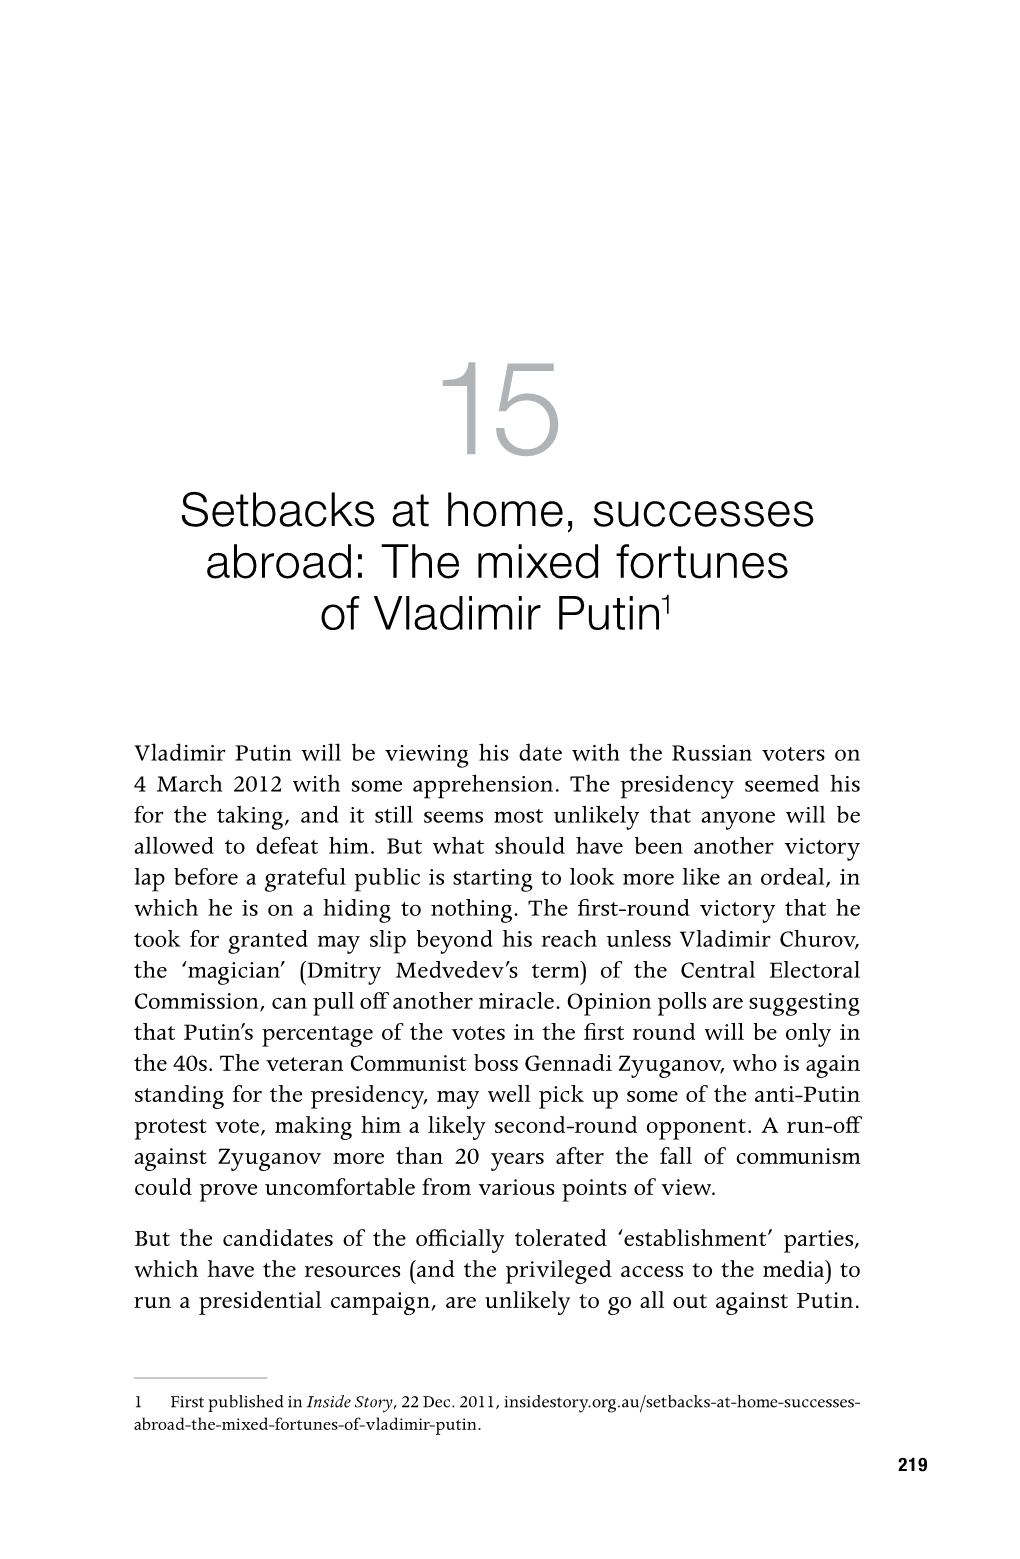 The Mixed Fortunes of Vladimir Putin1